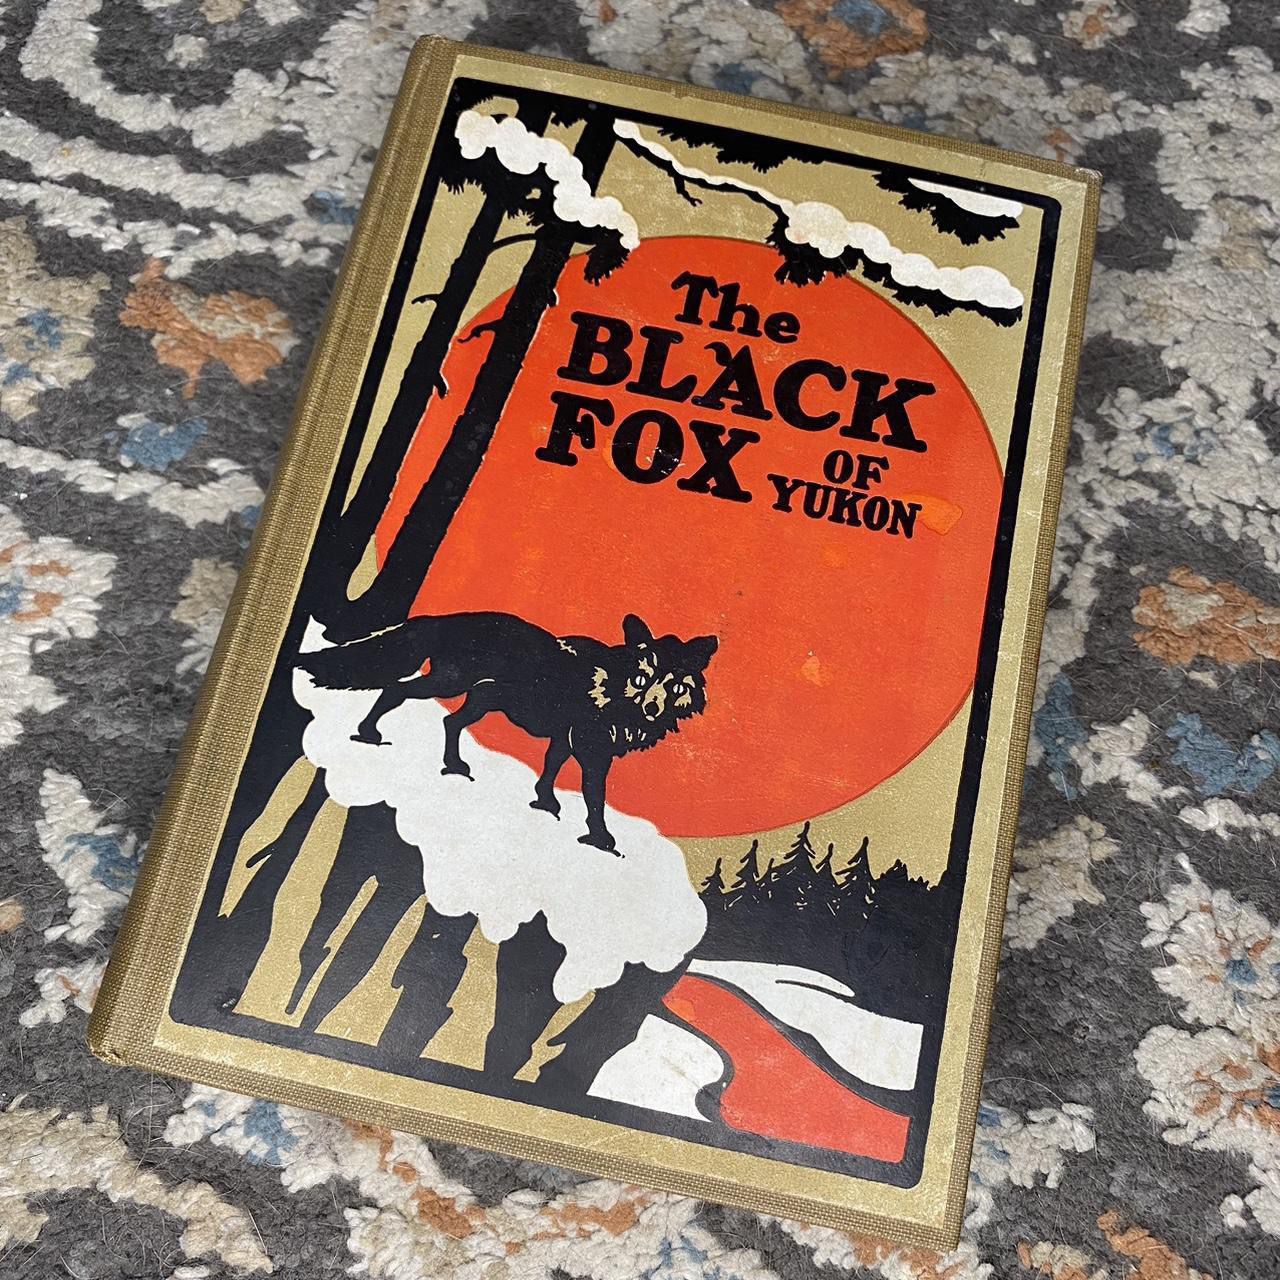 Beautiful Antique 1917 “The Black Fox Of Yukon” Hardcover Novel by Elliot Whitney